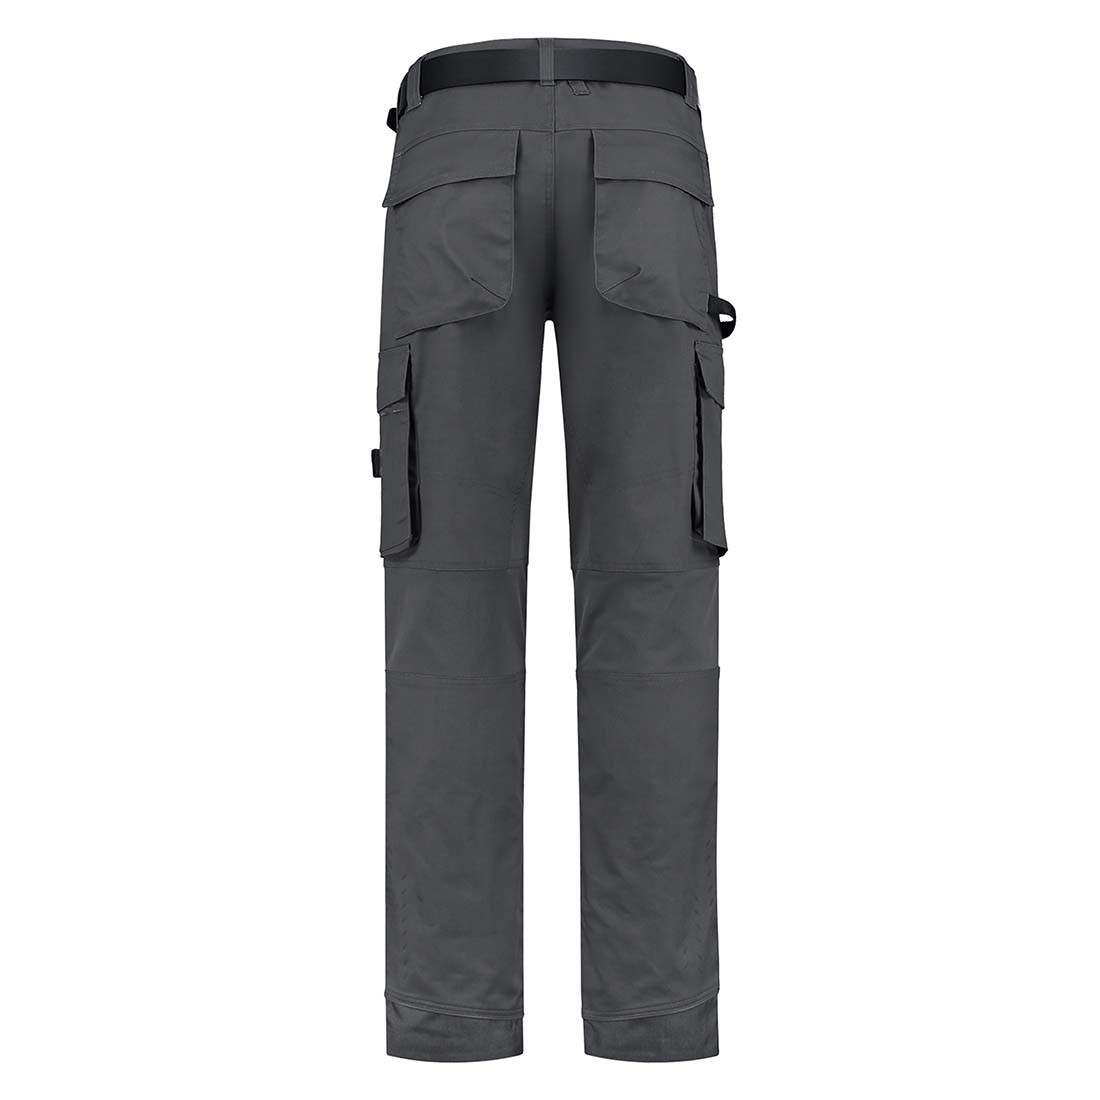 Unisex Stretch Work Trousers - Safetywear